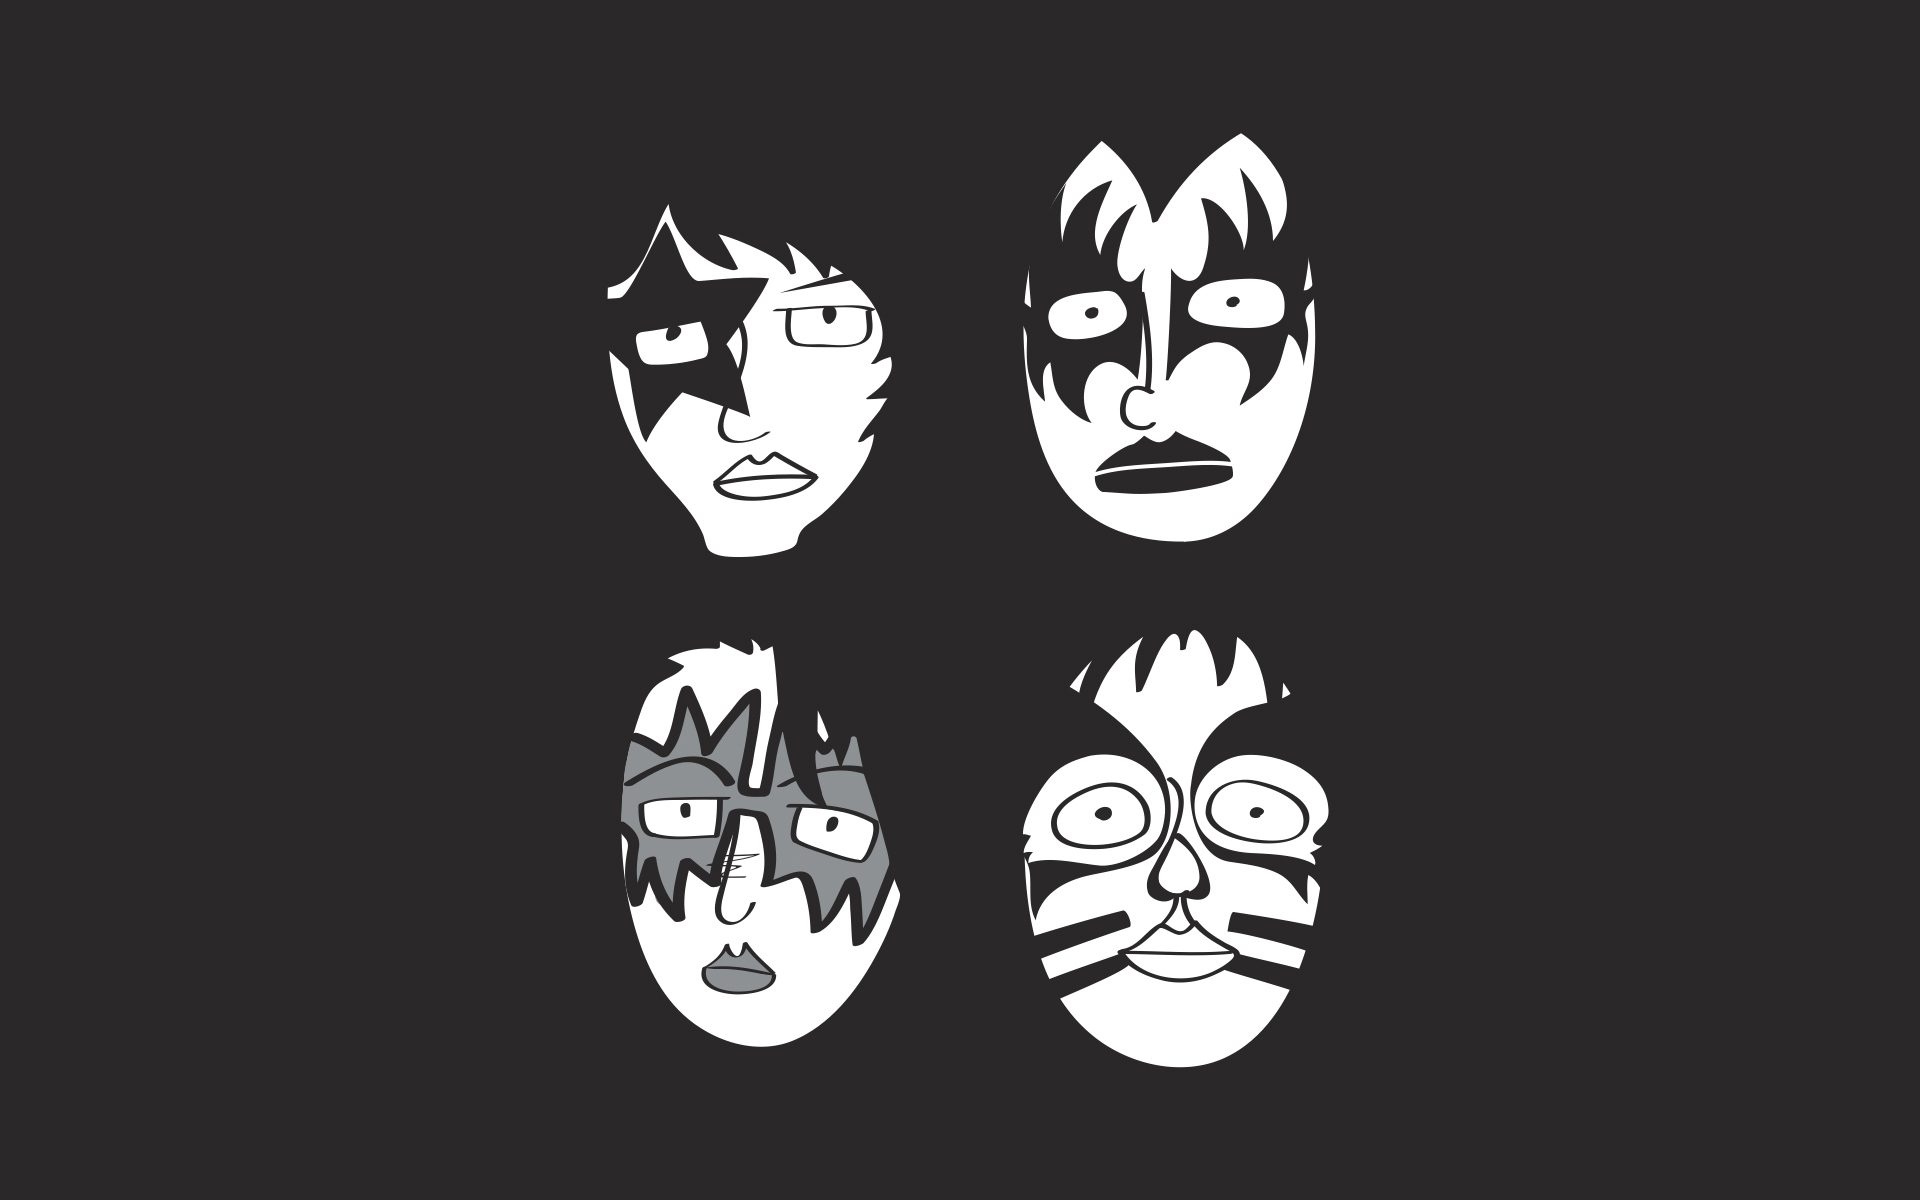 grayscale, Kiss music band, music bands, faces - desktop wallpaper